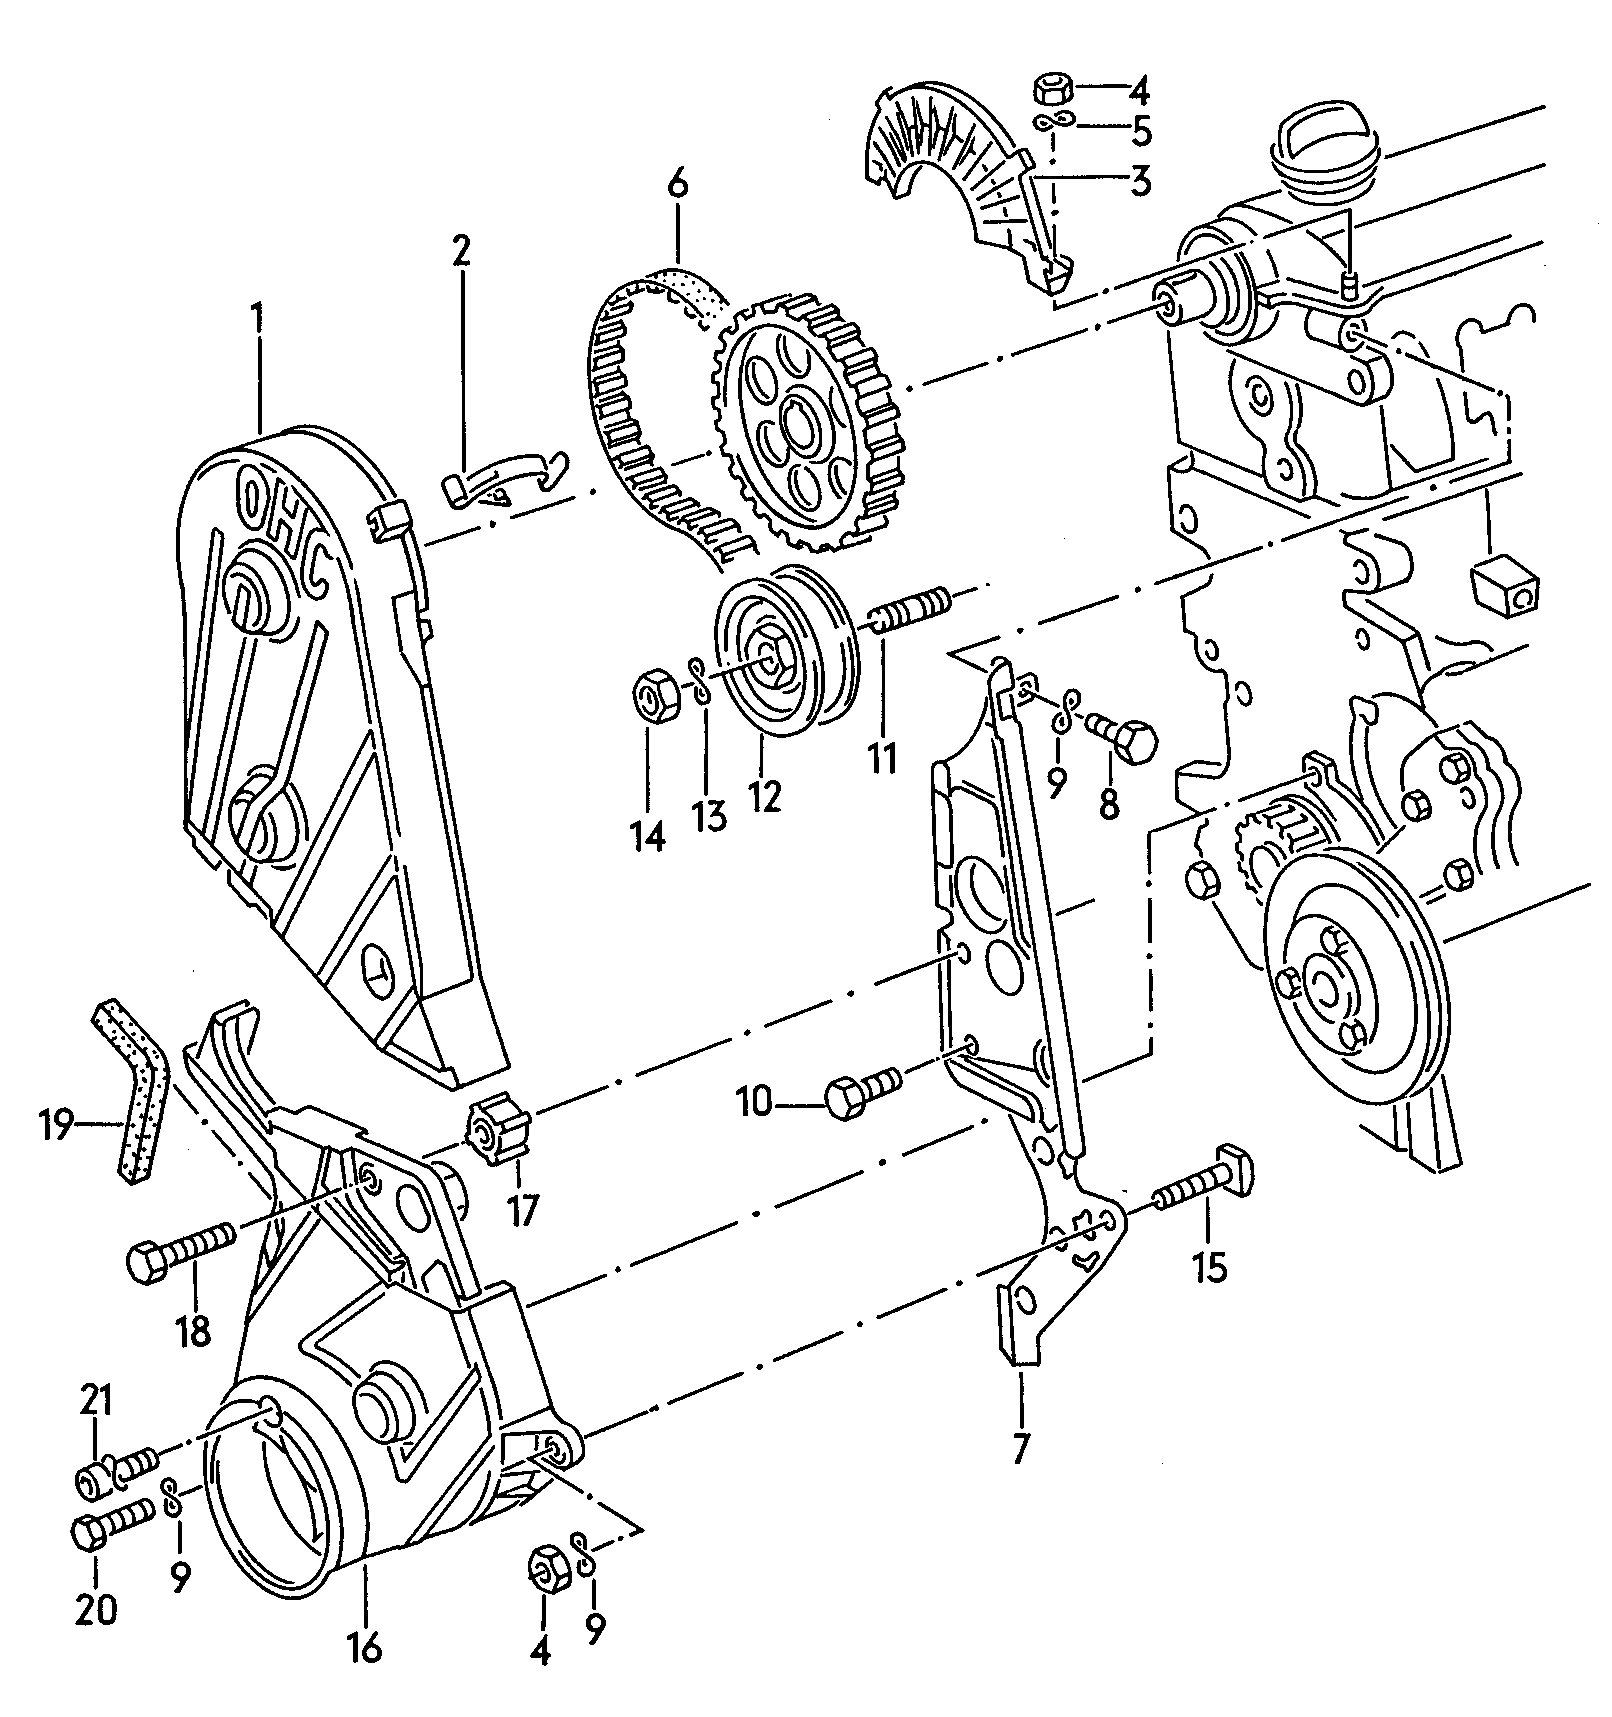 cinghia dentataCarter cinghia dentata 1,8l - Audi 100/Avant - a100